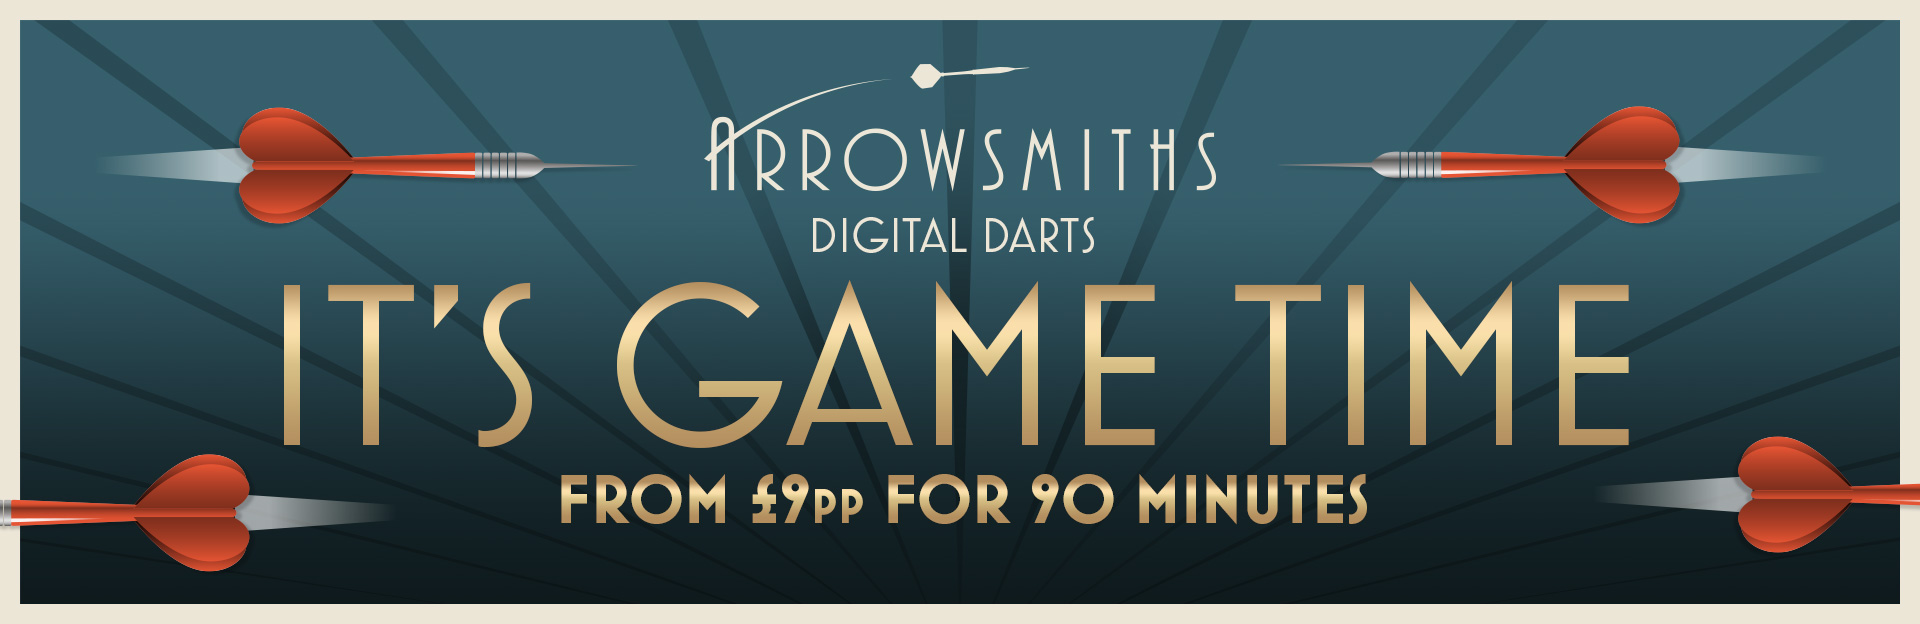 hs-2023-arrowsmiths-watford-homepage-offer-banner.jpg